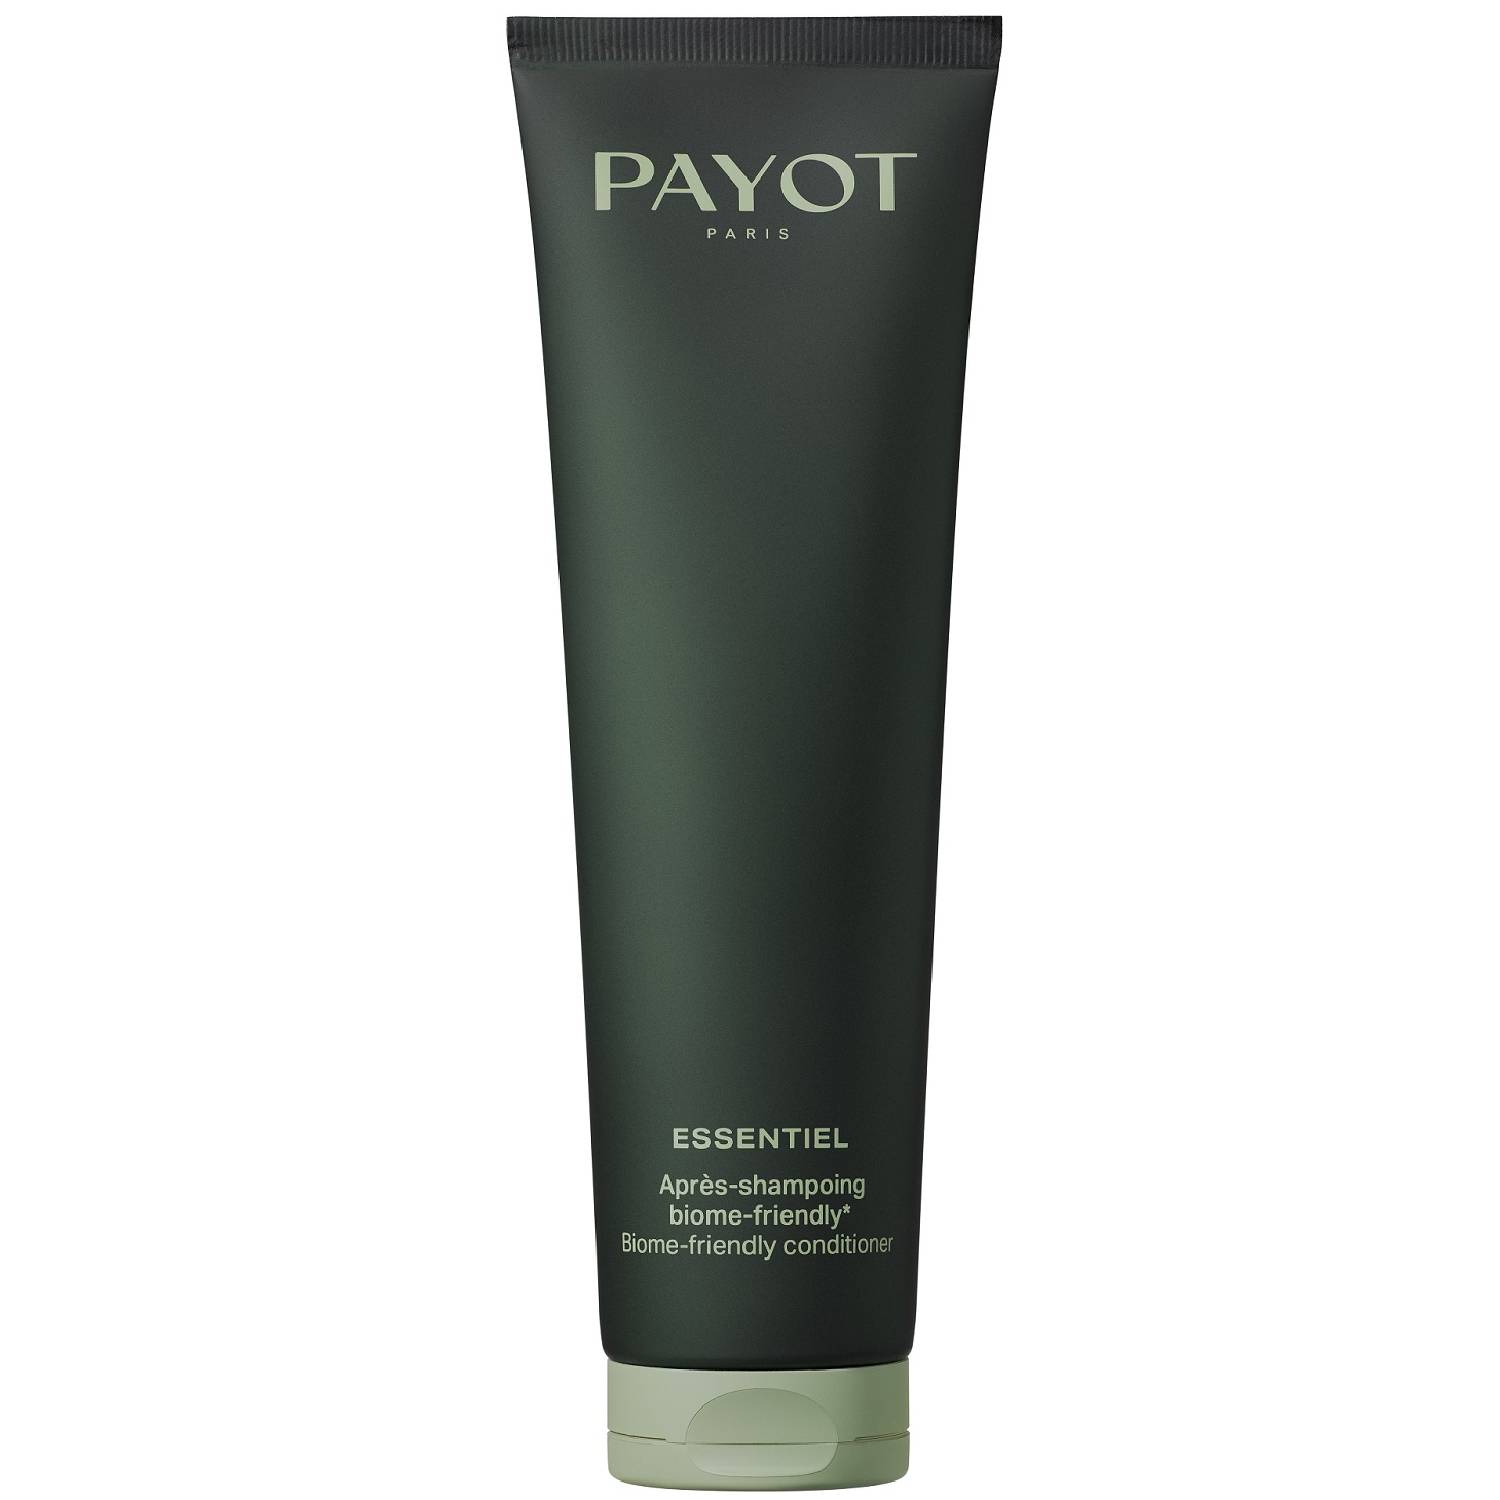 Payot Восстанавливающий кондиционер, благоприятный для микробиома After-Shampoing Biome-Friendly Conditioner, 150 мл (Payot, Essentiel)